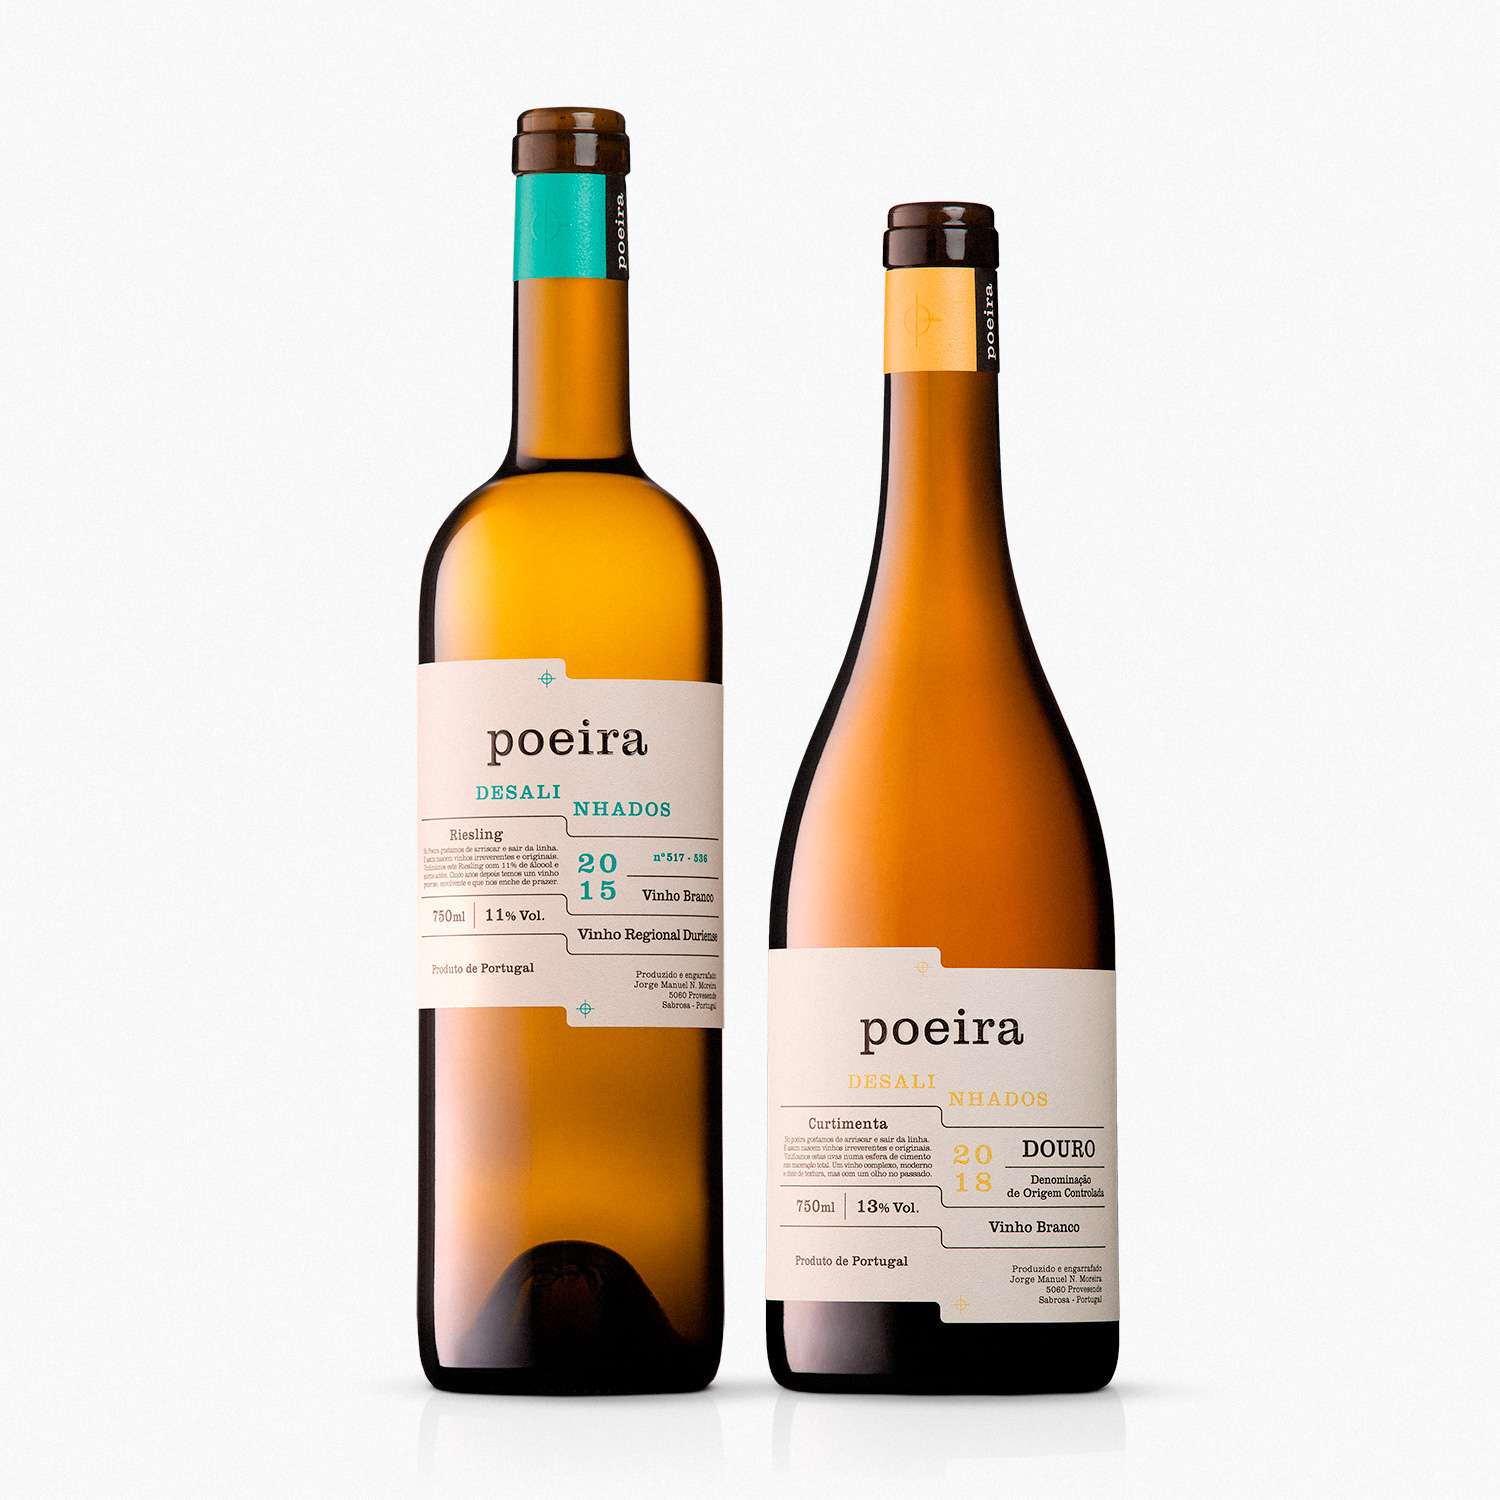 Poeira Desalinhados Label Design by Bisarro Studio